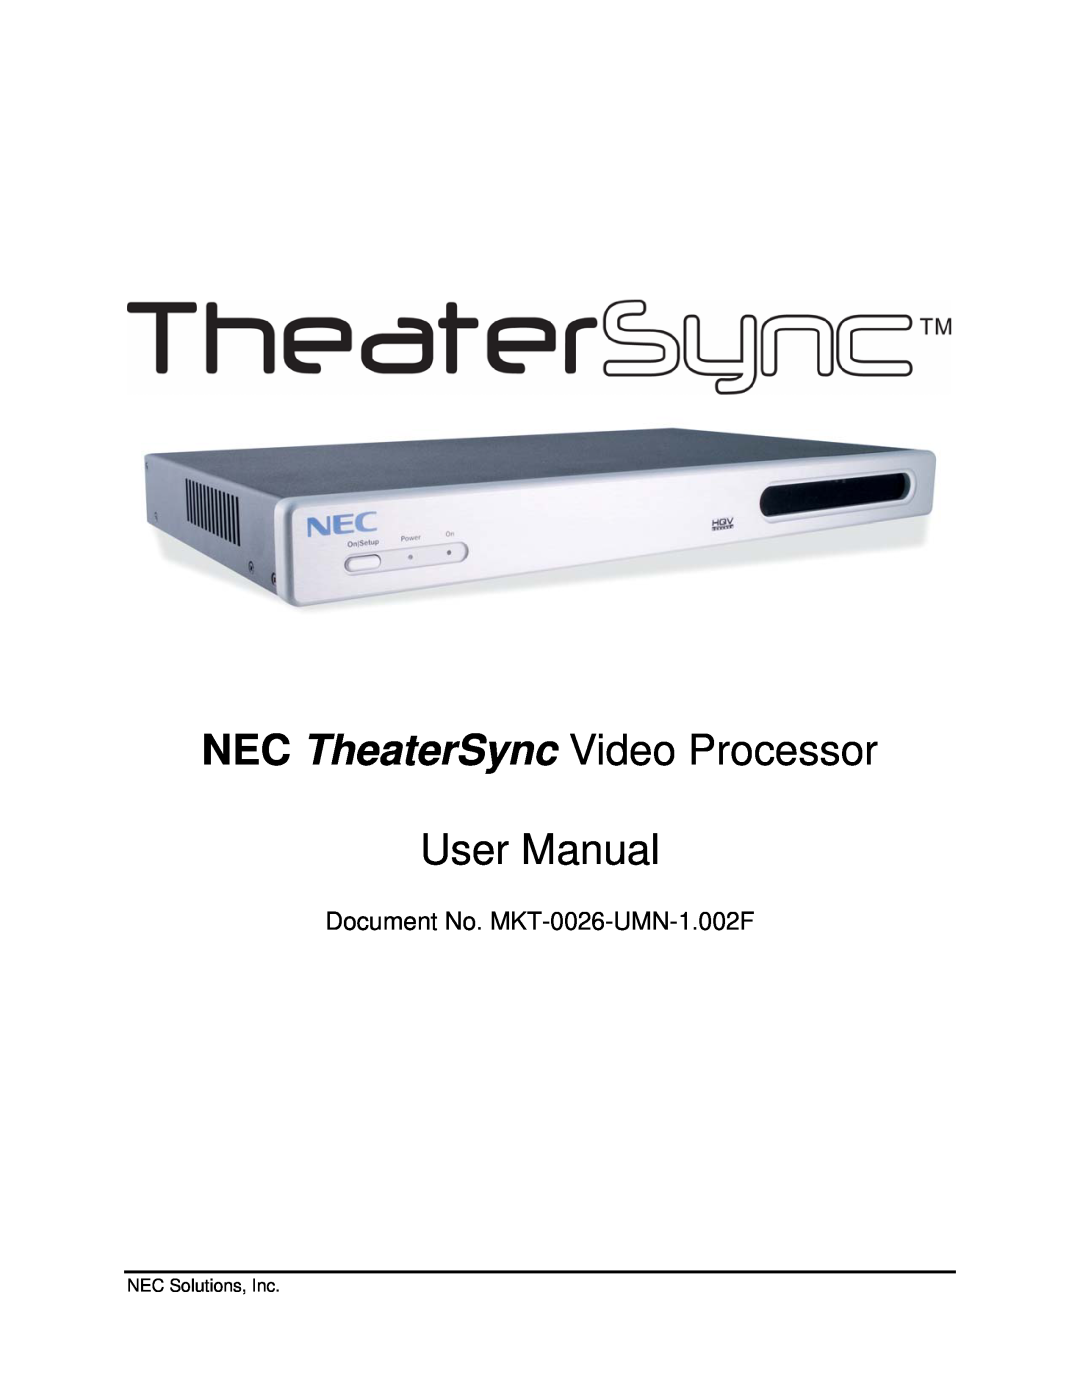 NEC TheaterSync Video Processor user manual Document No. MKT-0026-UMN-1.002F 